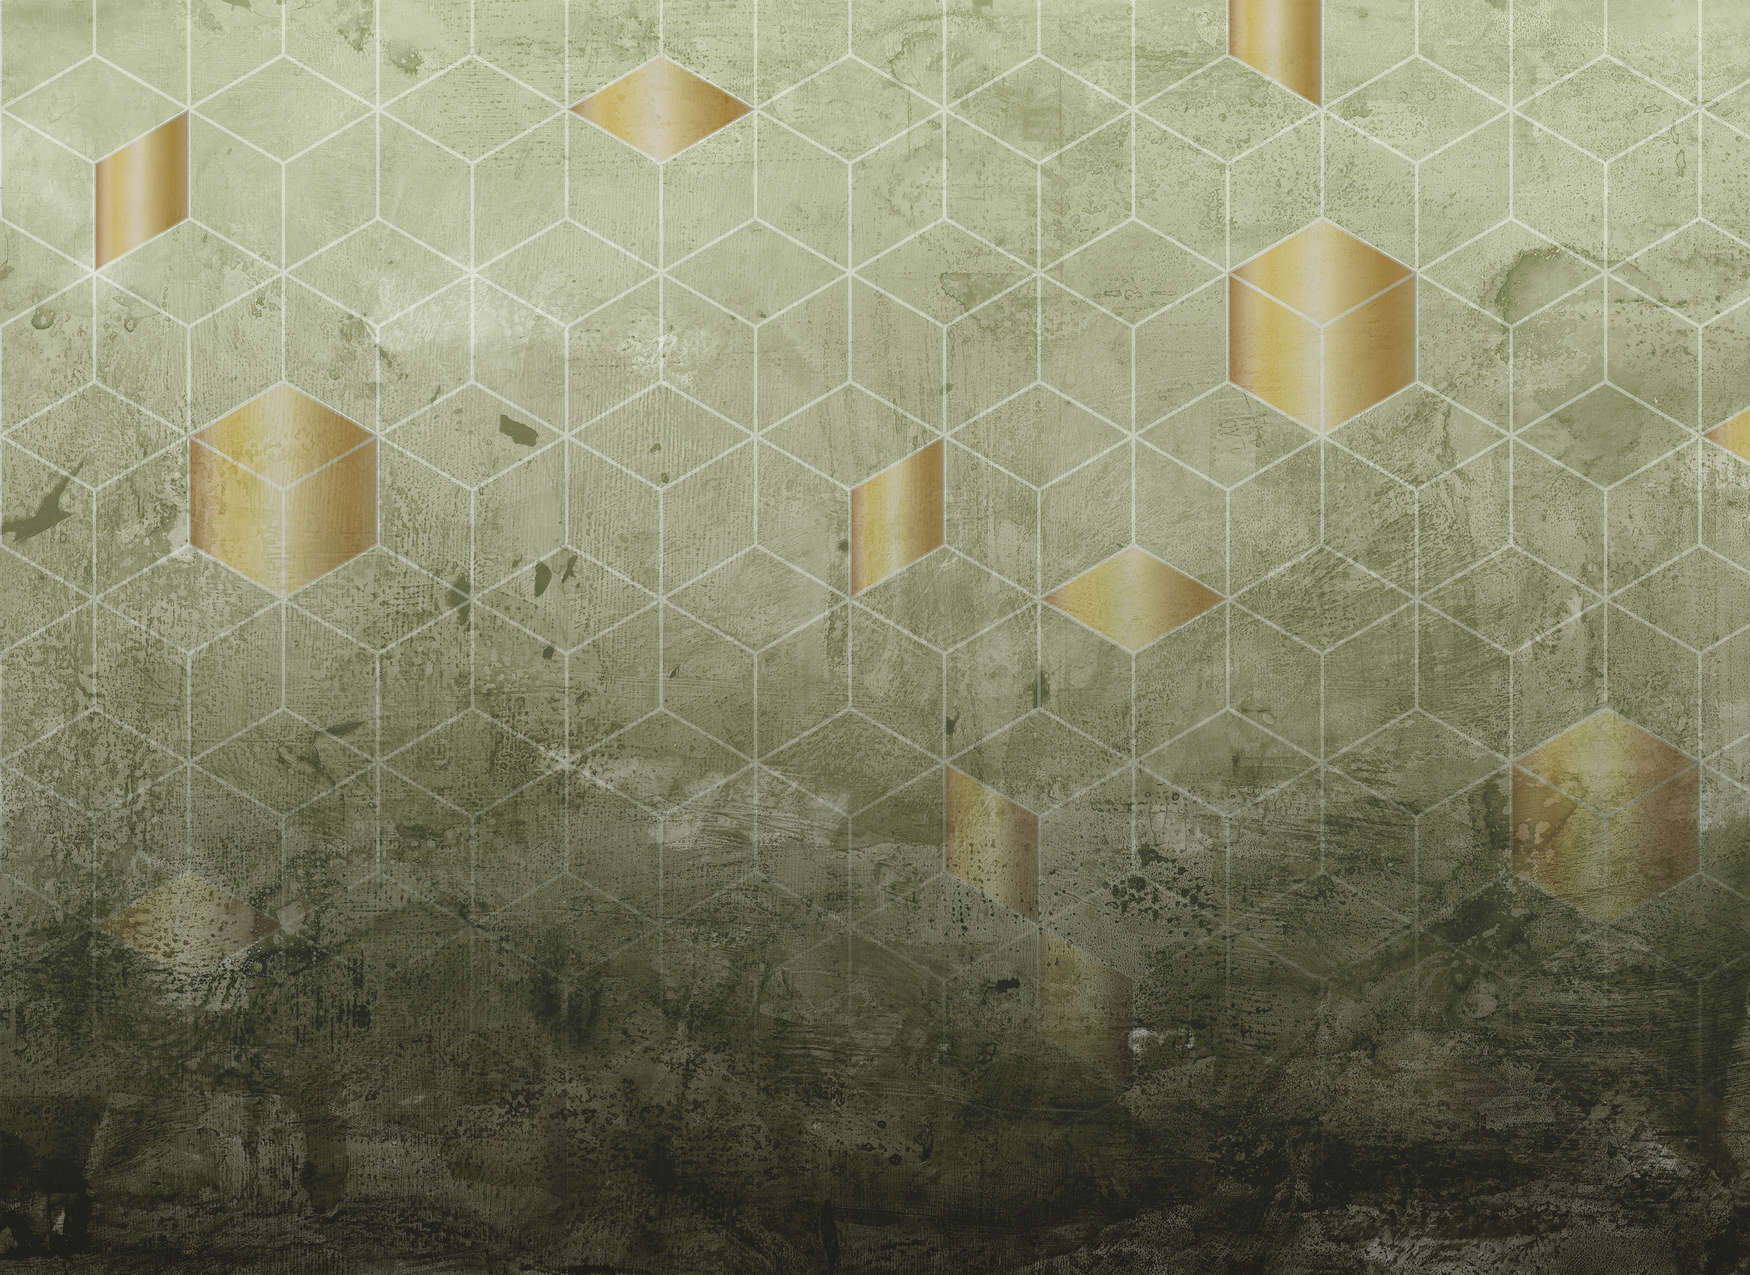             Fototapete quadratische Muster mit 3D Effekt – grün, Gold
        